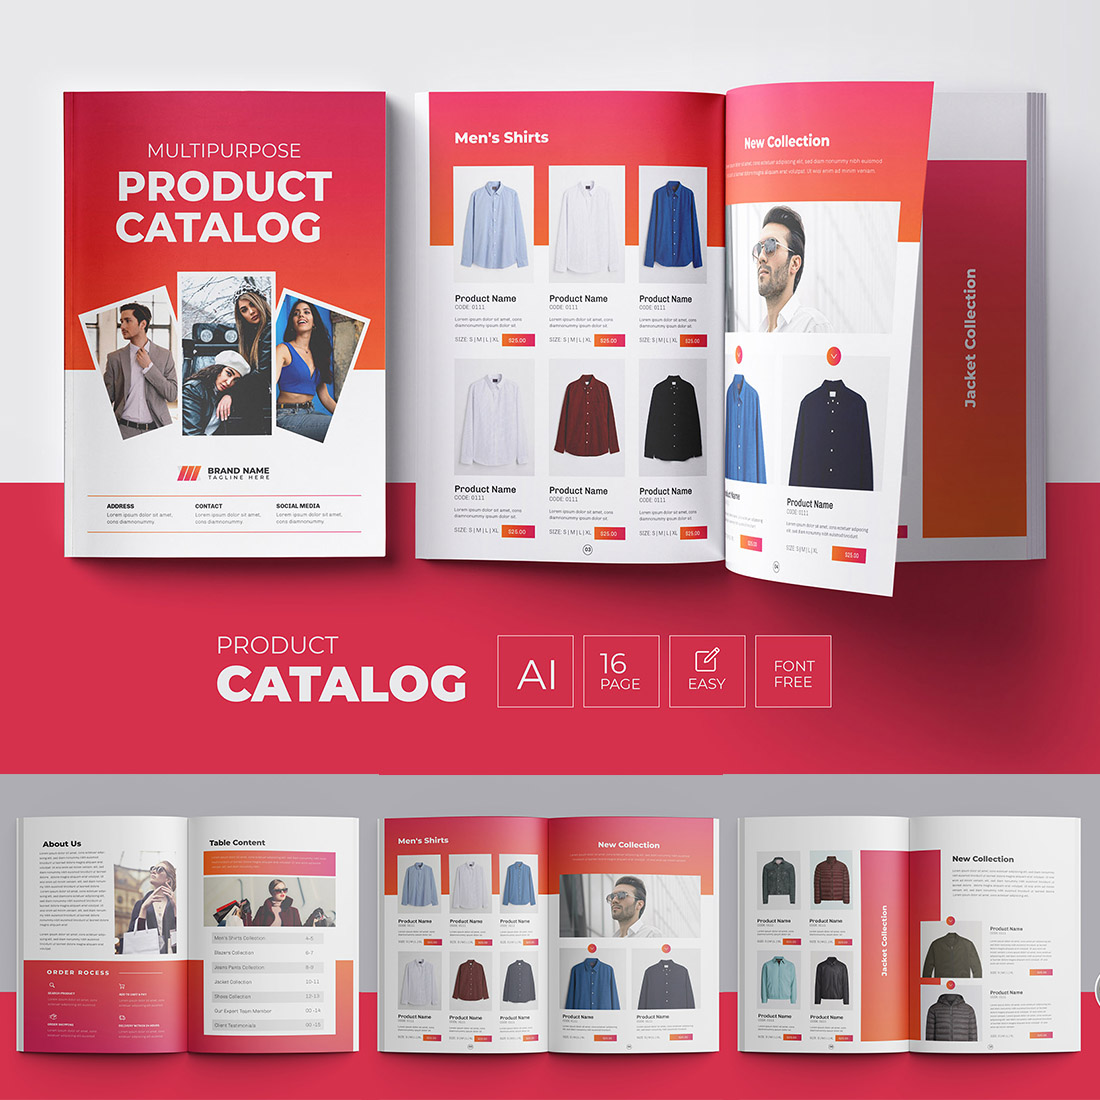 Multipurpose Product Catalog Template Design cover image.